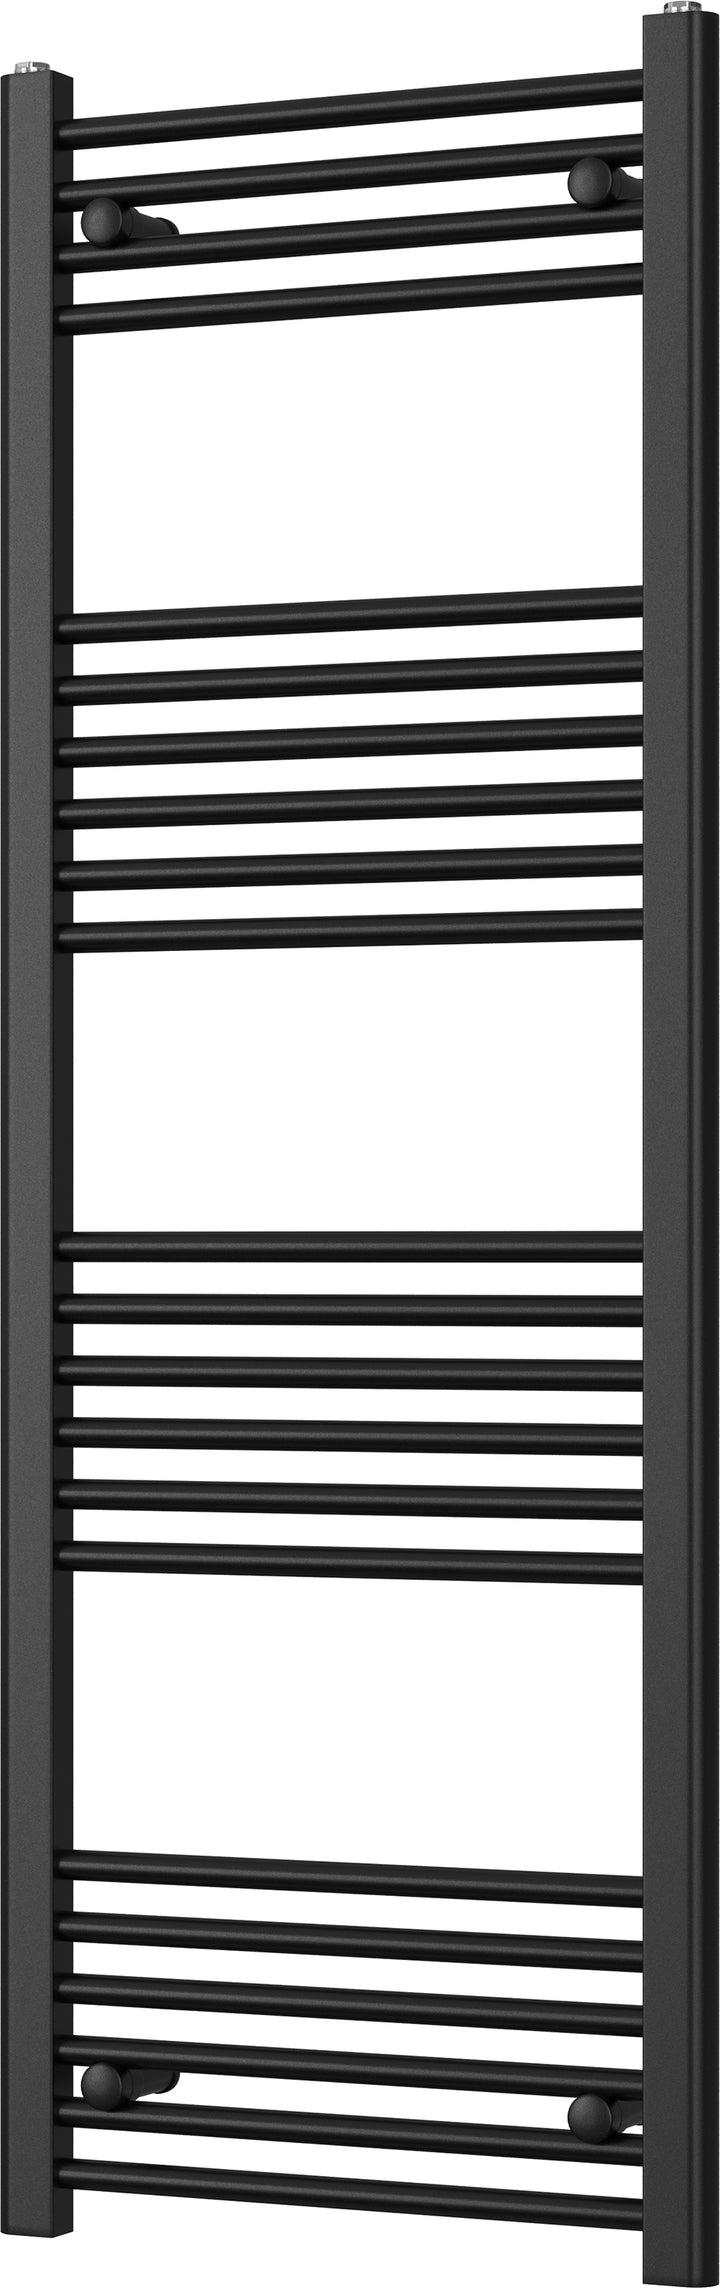 Zennor - Black Heated Towel Rail - H1400mm x W500mm - Straight